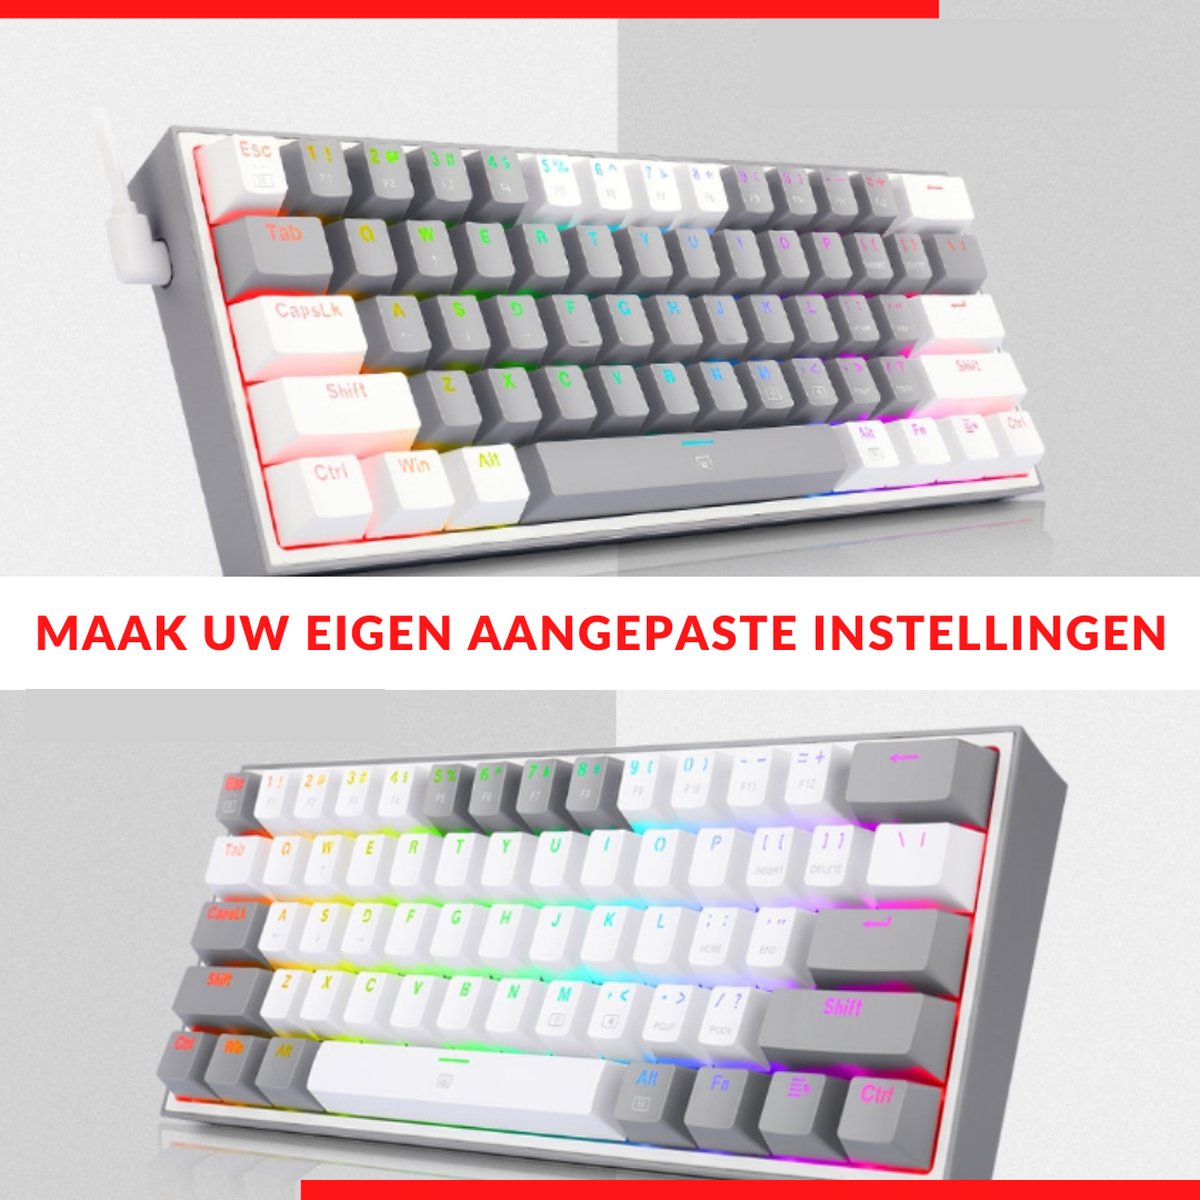 RK61 Gaming Keyboard Wit - RGB Verlichting - Hot-Swappable - Ergonomisch Mechanisch Gaming Toetsenbord - USB - Afneembare kabel - Wit/Grijs